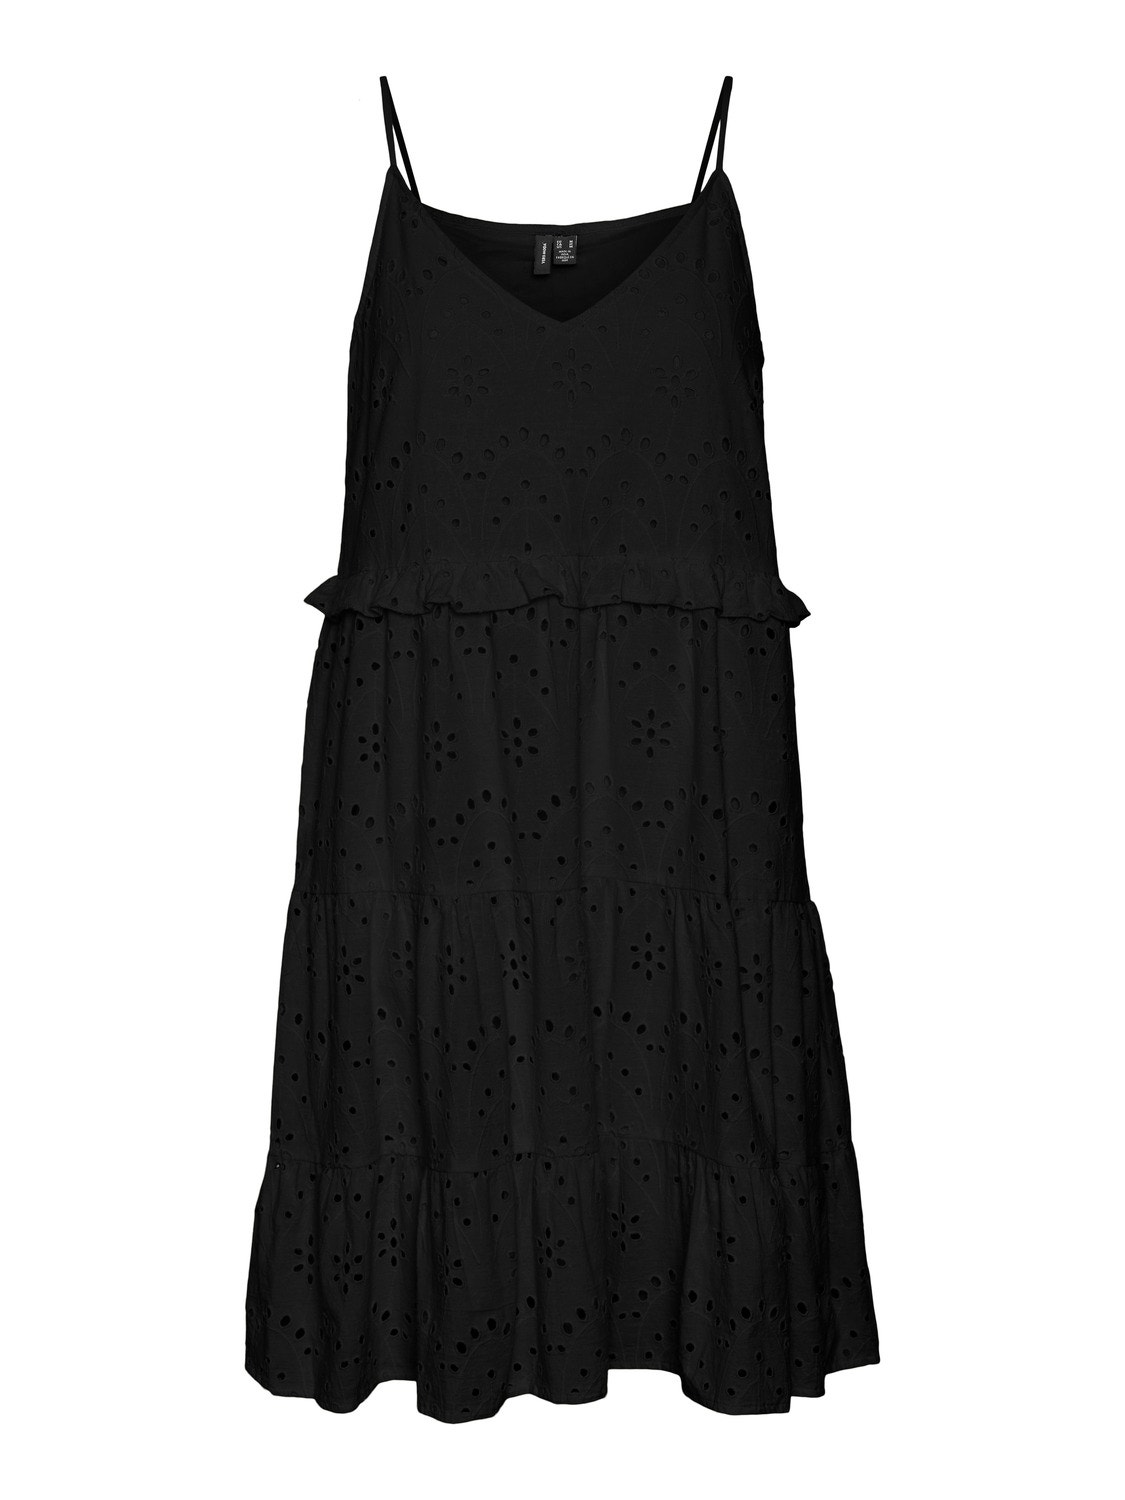 Vero Moda VMELINA Short dress -Black - 10272006